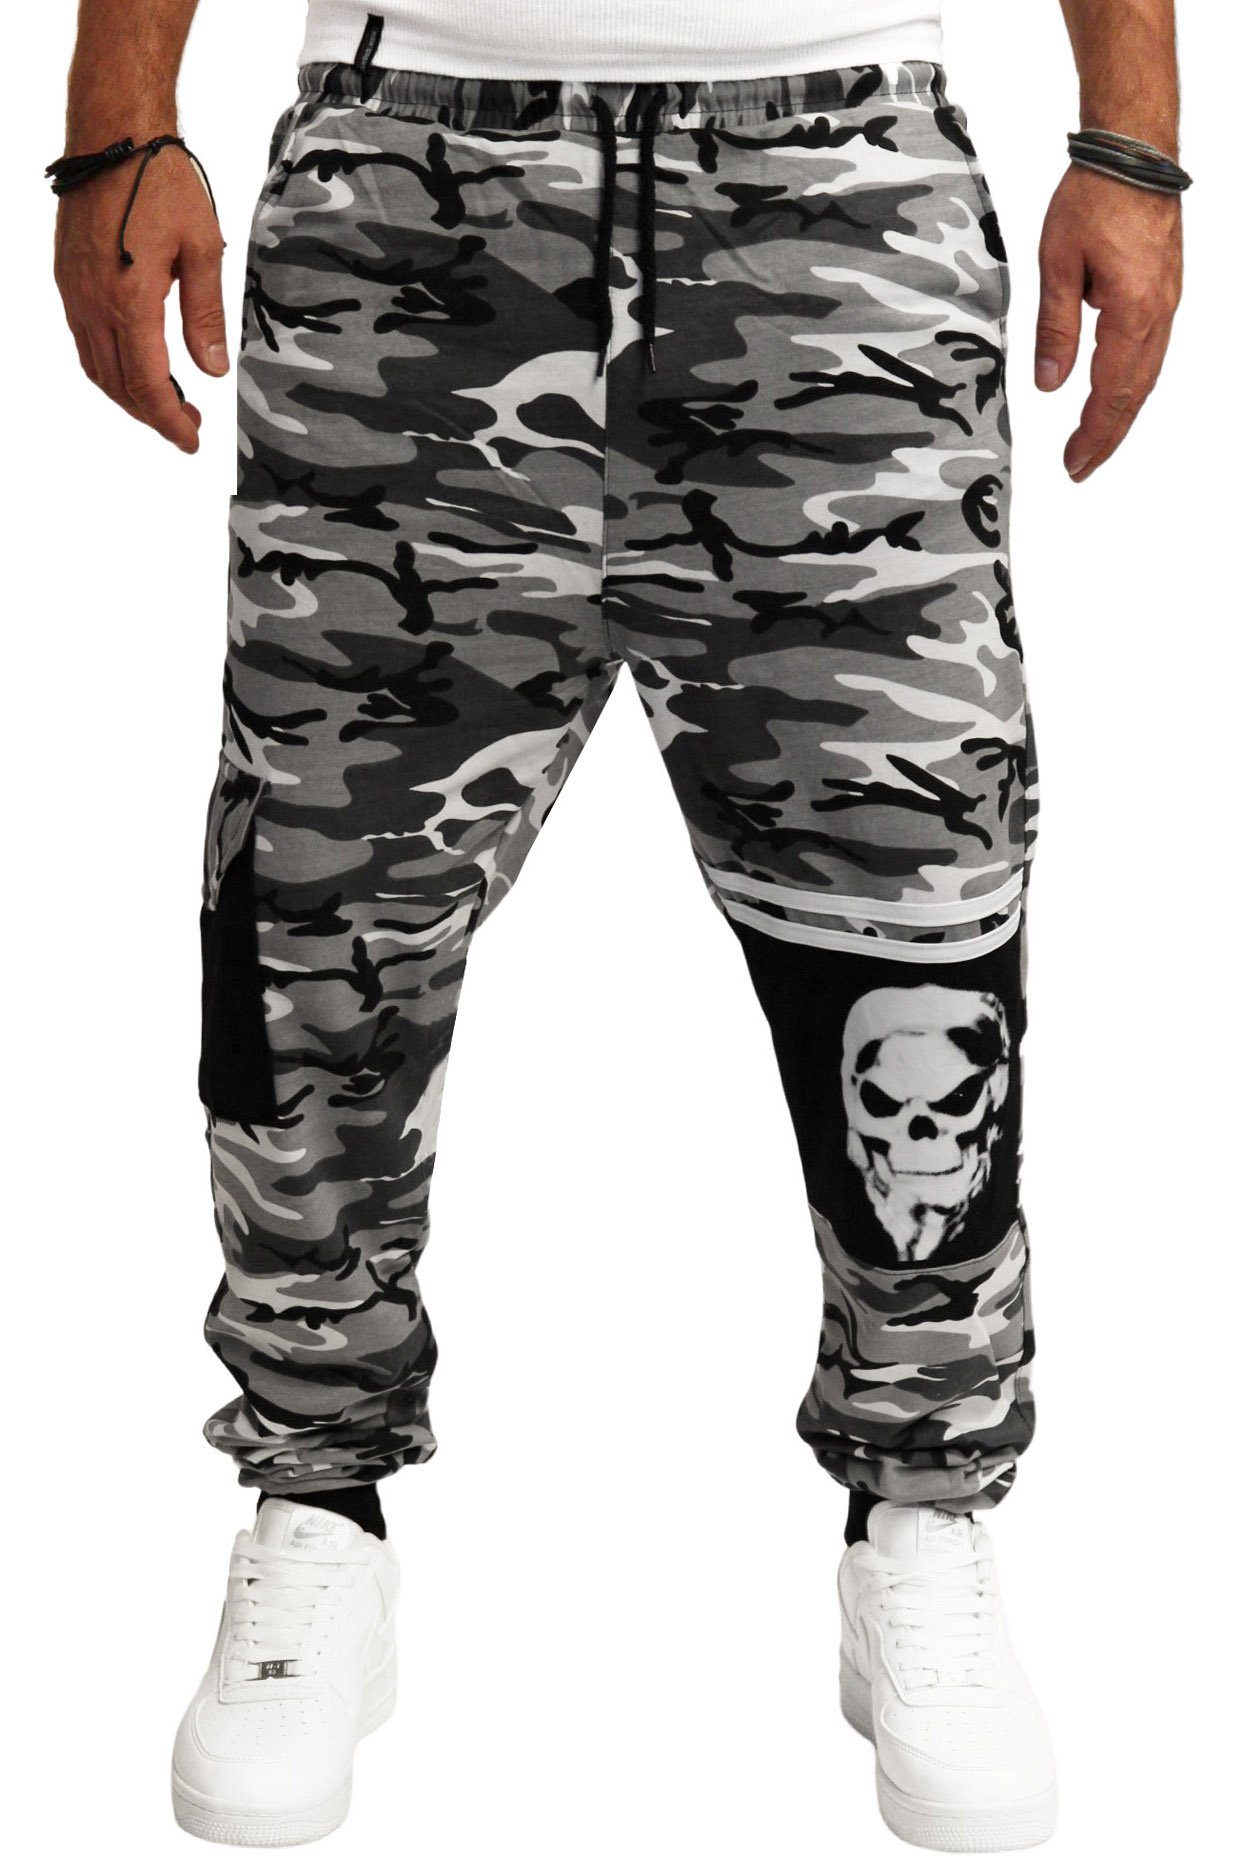 RMK Jogginghose »Herren Trainingshose Totenkopf Skull Fitnesshose Camouflage  Army Tarn Hose«